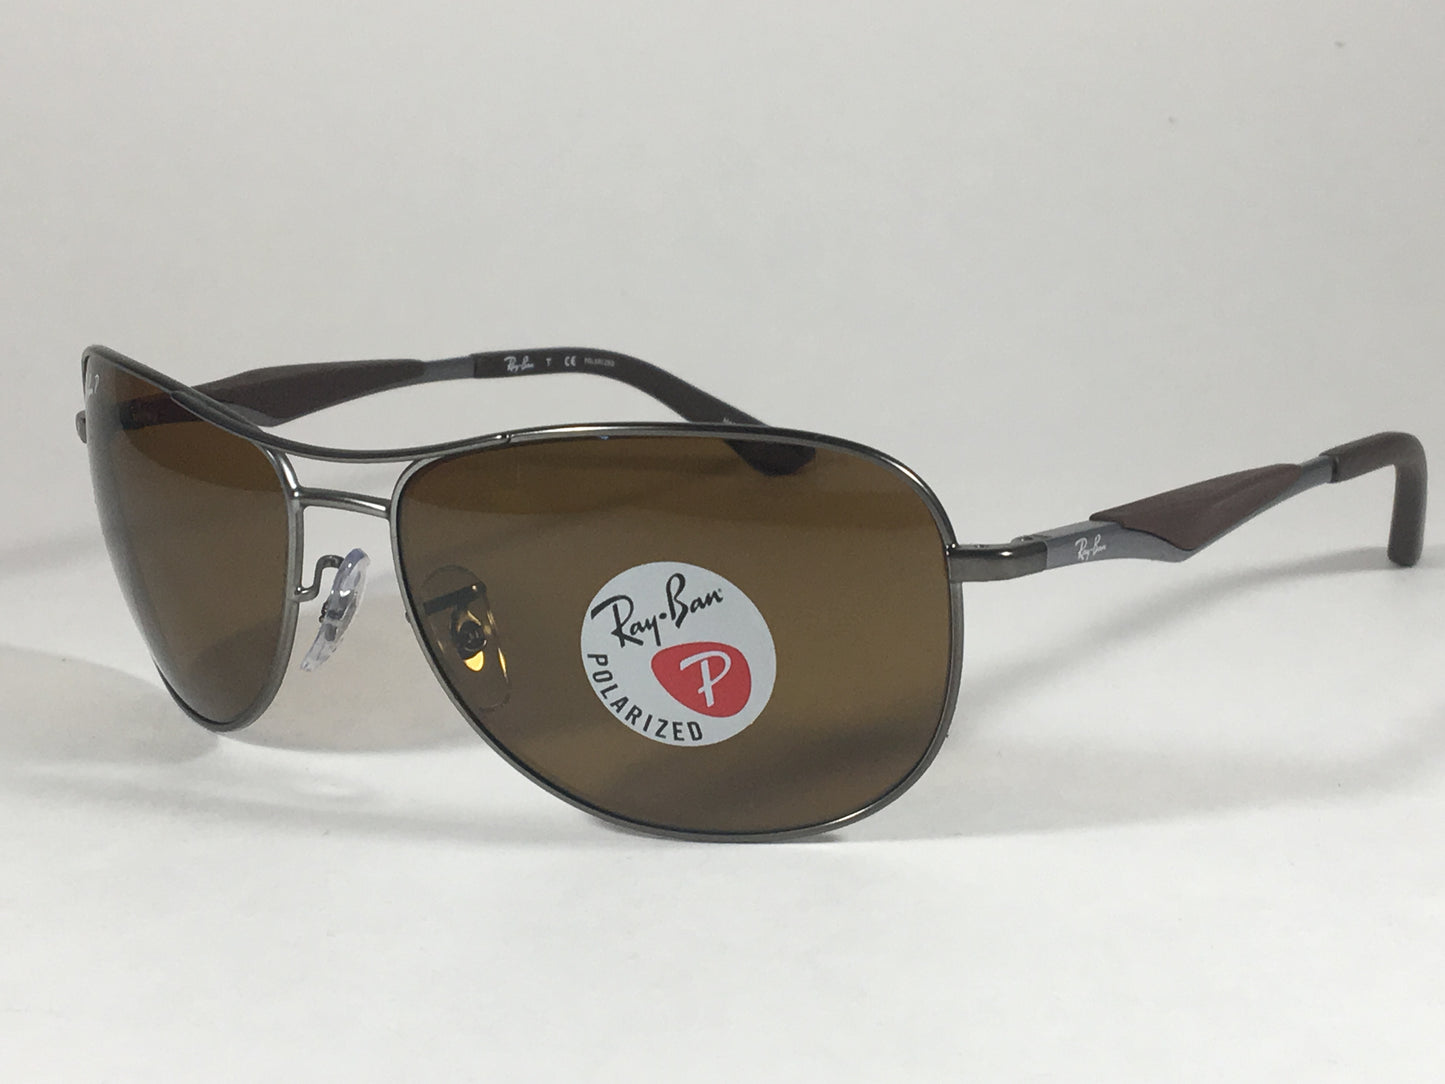 Ray-Ban Polarized Aviator Pilot Sunglasses Gray Black Brown Frame Brown Lens Rb3519 029/83 - Sunglasses